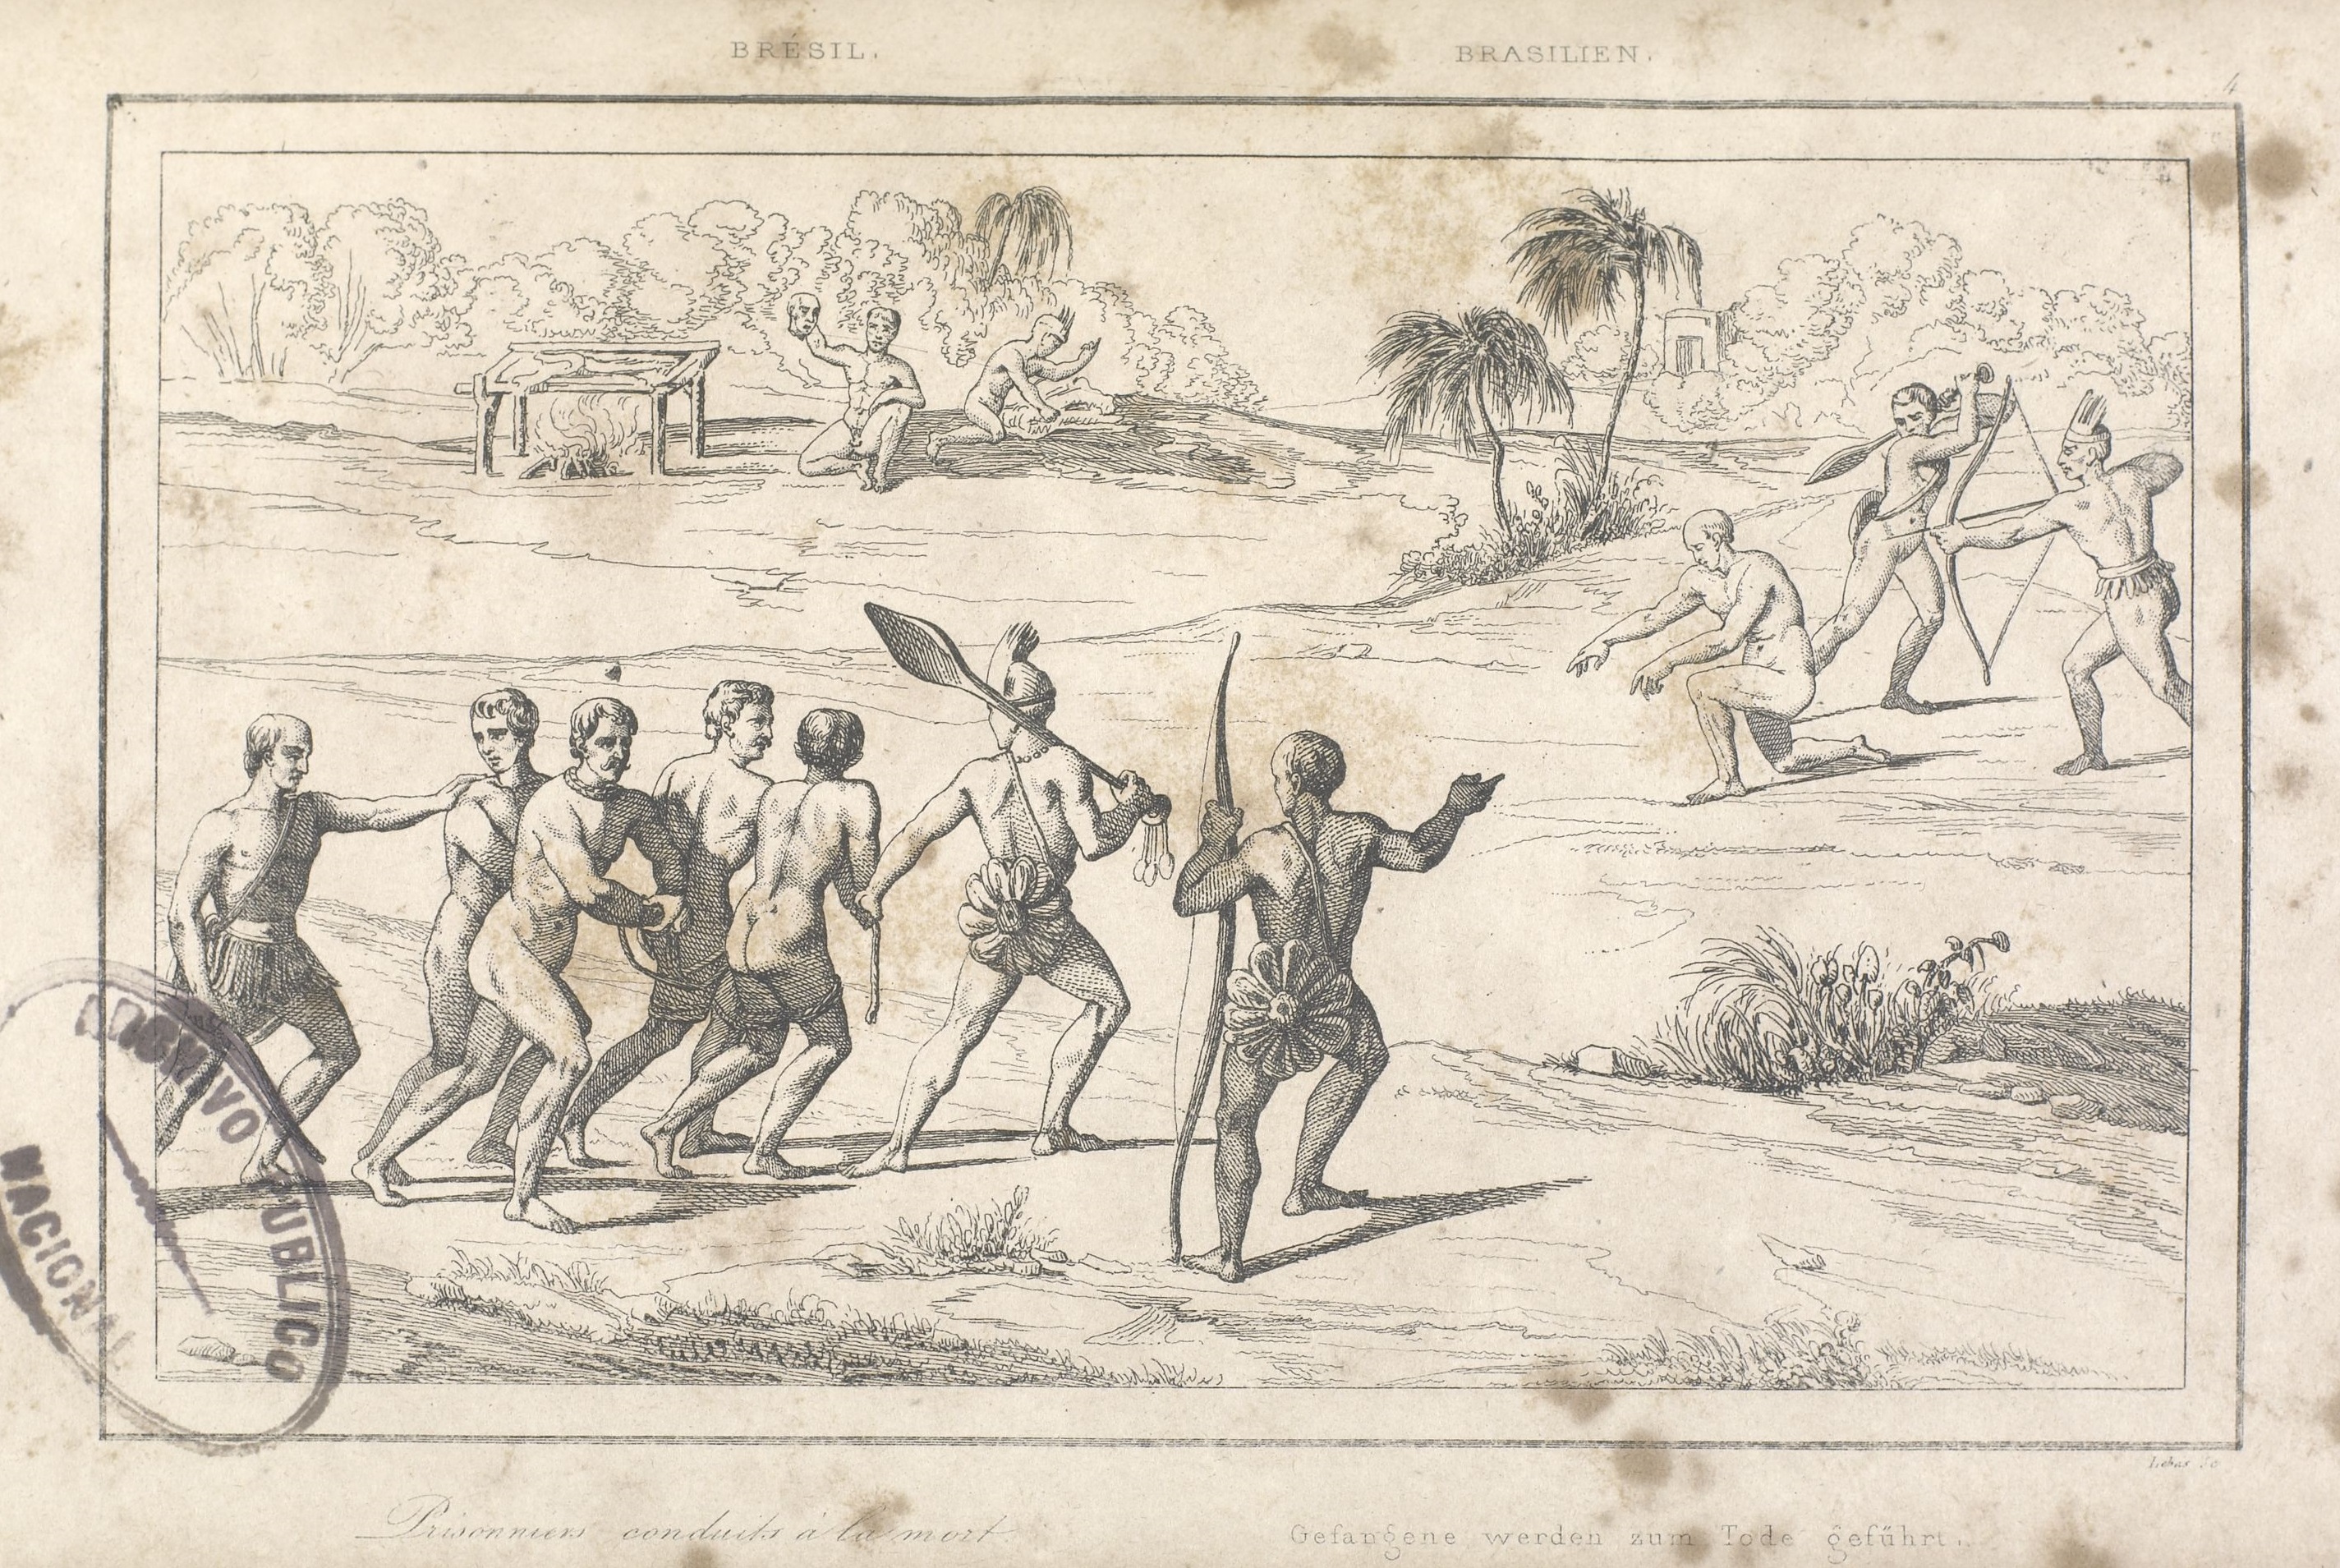 Prisioneiros conduzidos à morte. Em: DENIS, Jean Ferdinand. Brésil. Paris: Firmind Didot Frères, 1837, p.32. OR 2083.